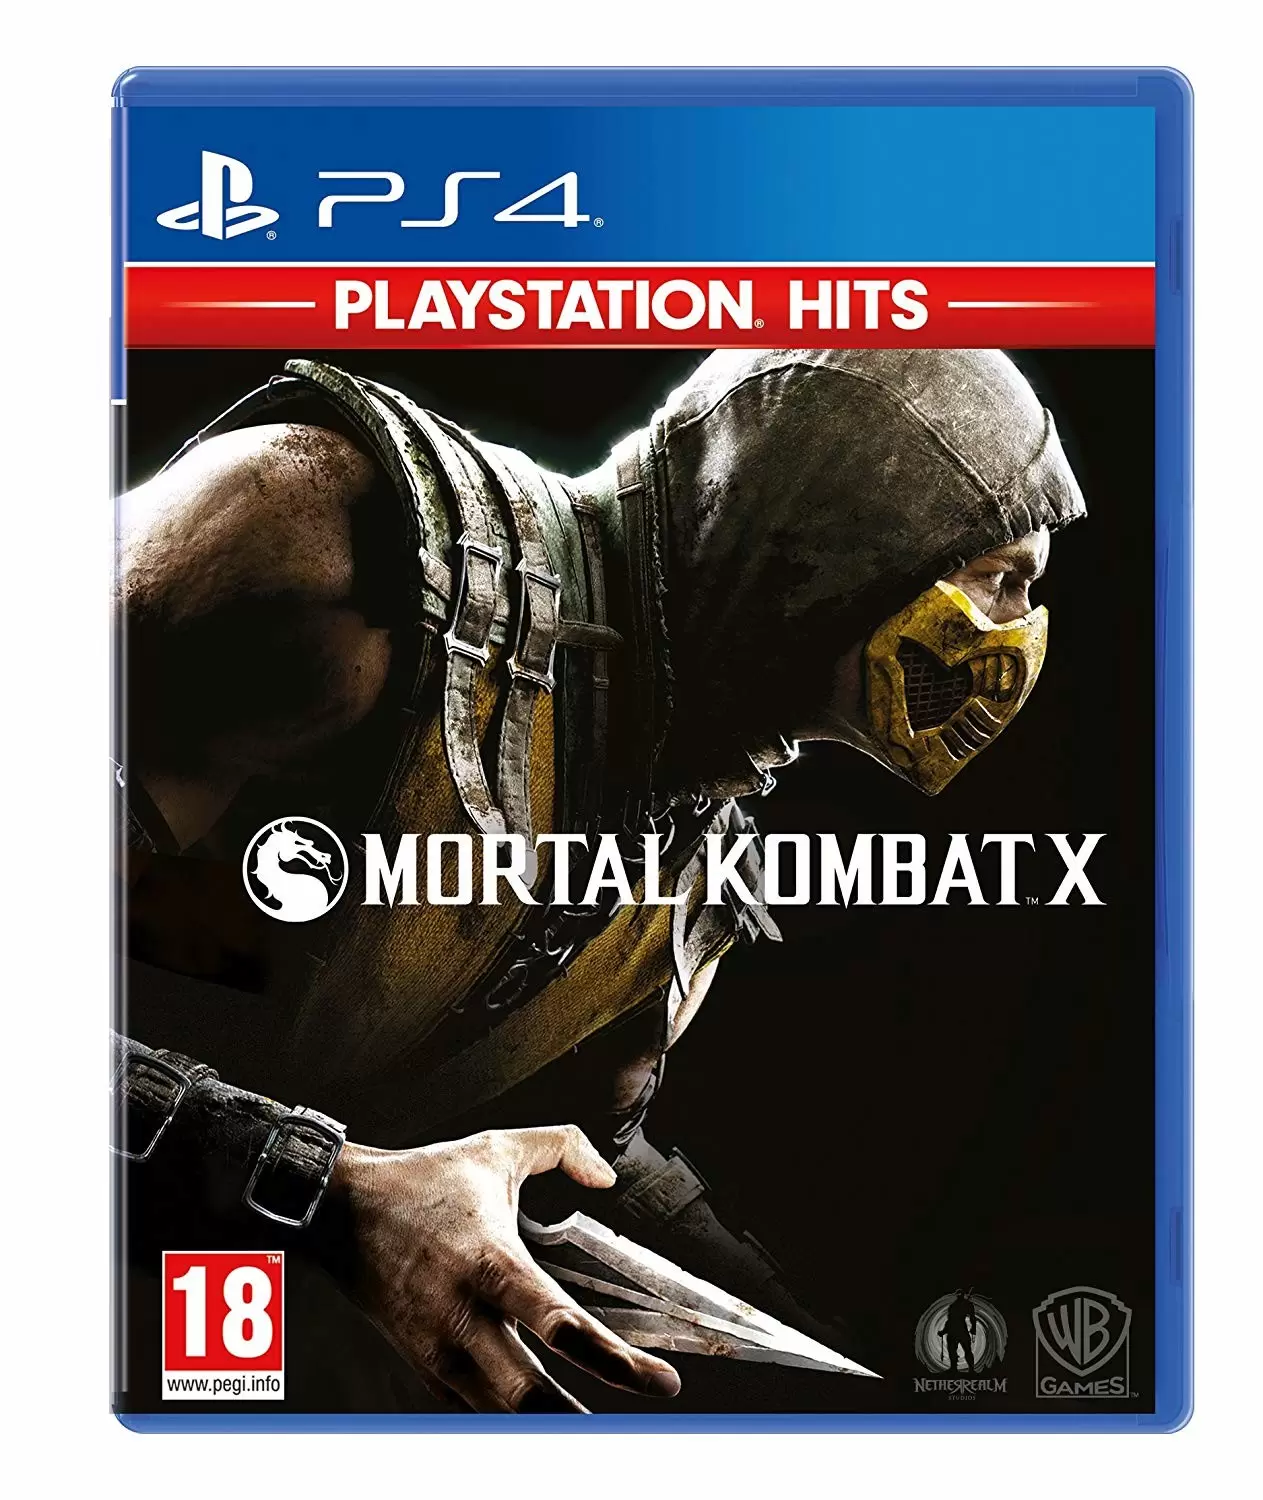 Jeux PS4 - Mortal Kombat X (Playstation Hits)